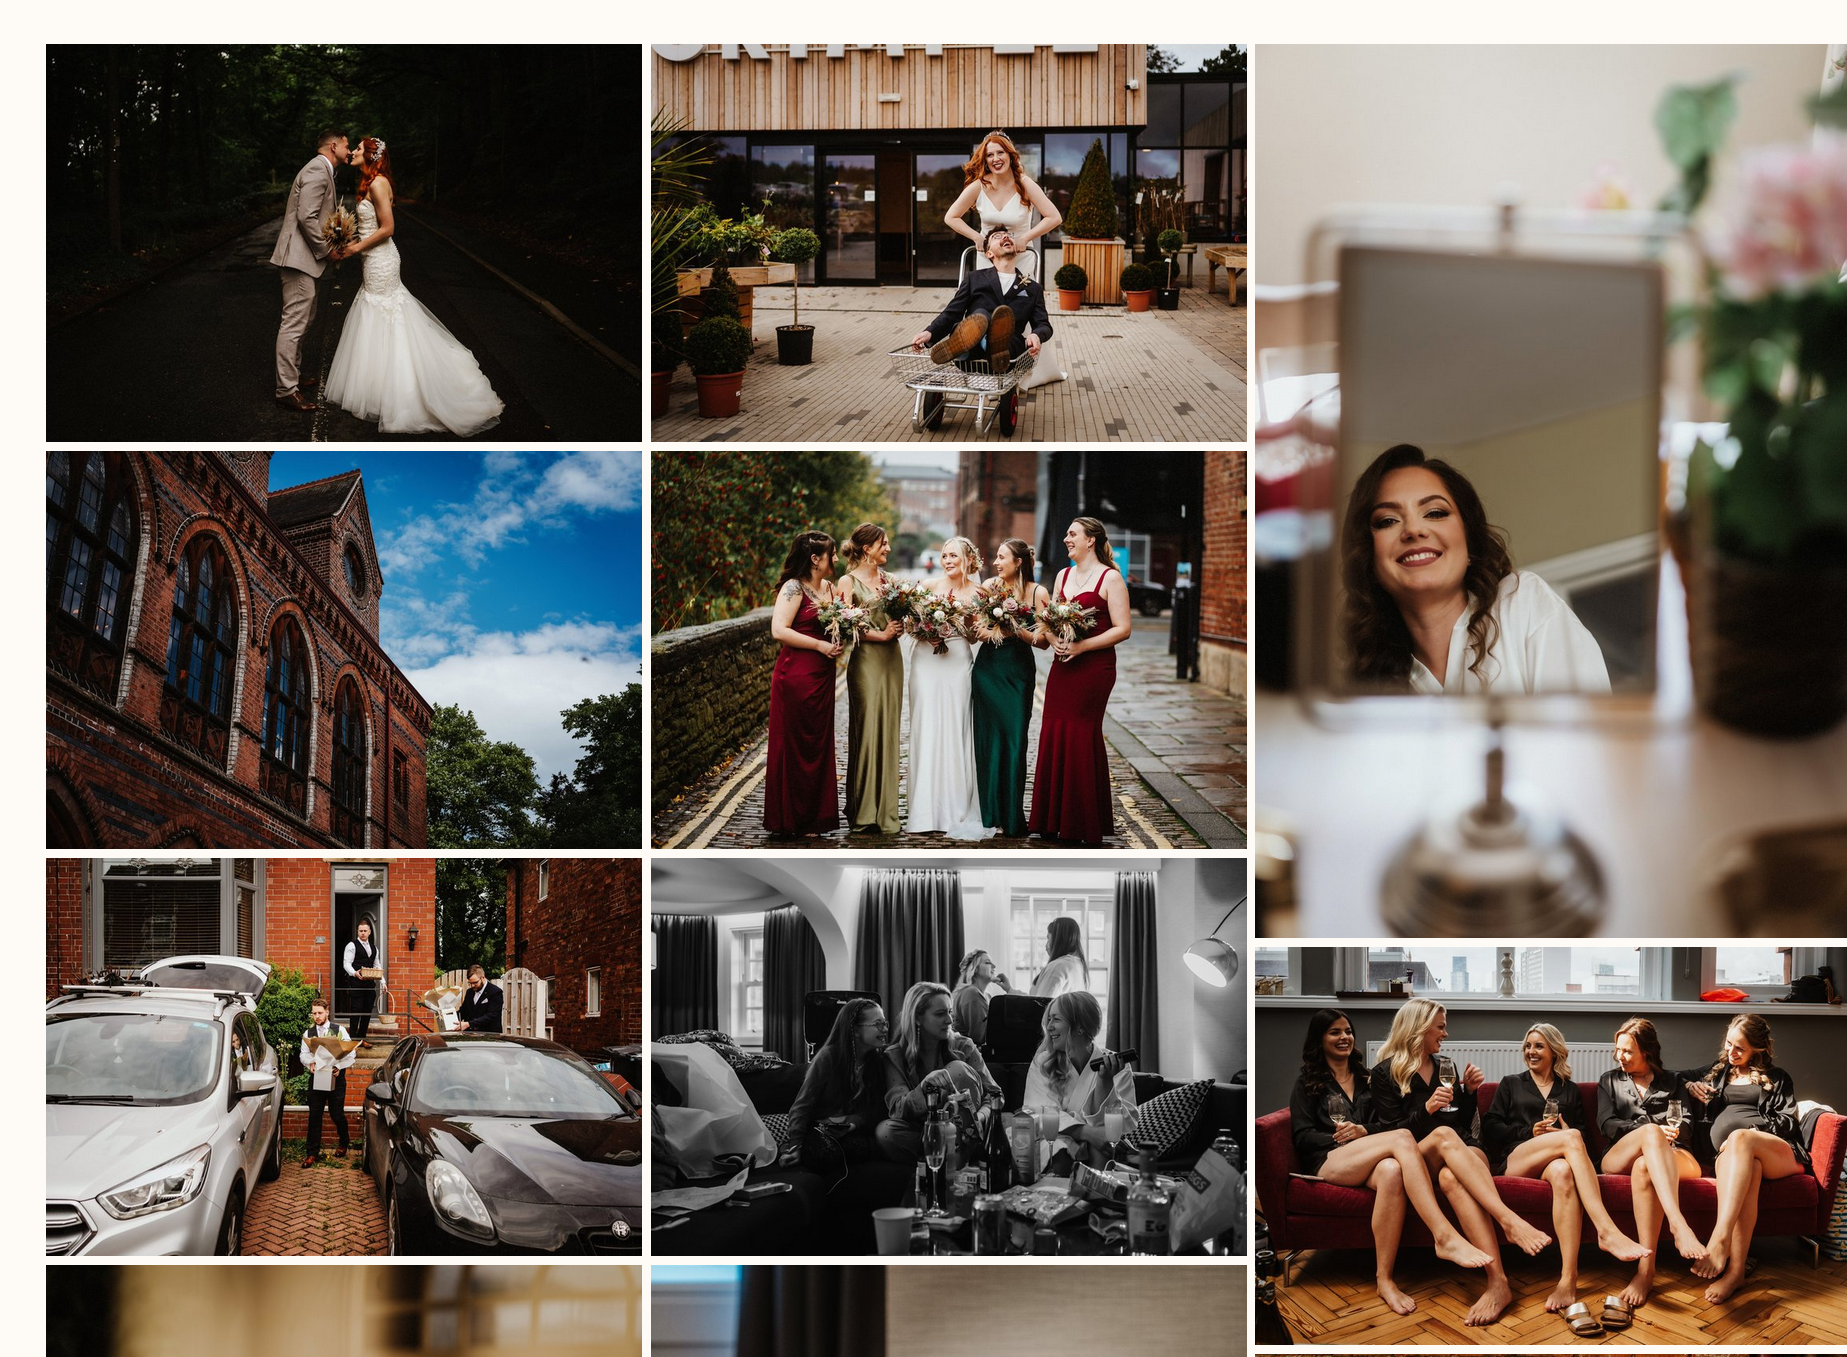 Example: The wedding photography portfolio page